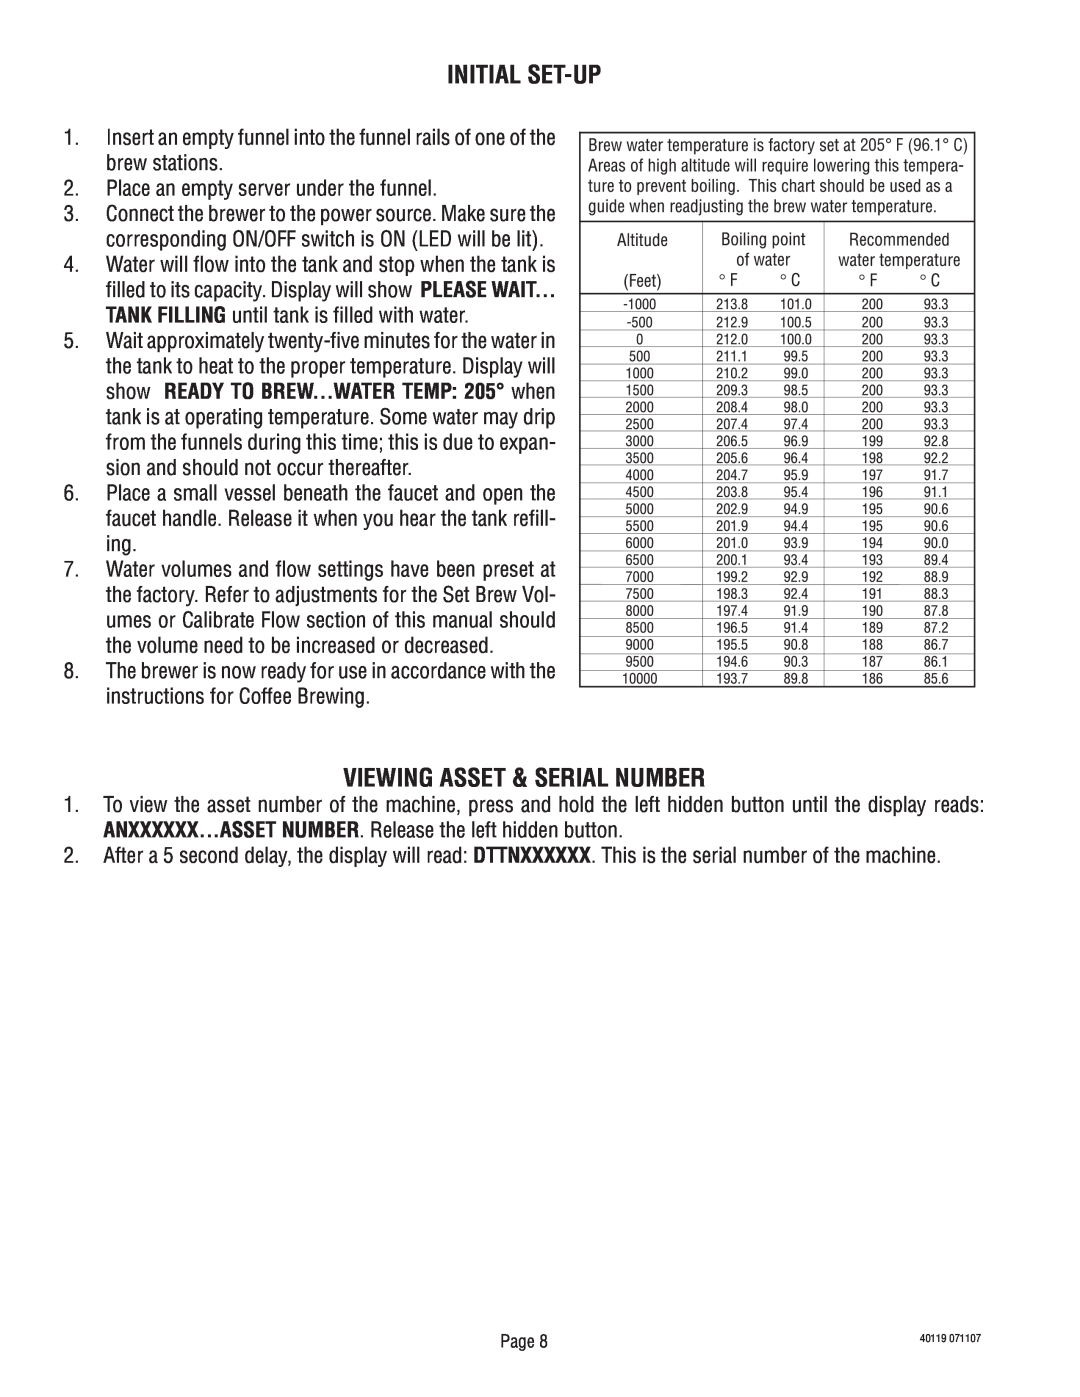 Bunn TITAN DUAL manual Initial Set-Up, Viewing Asset & Serial Number 